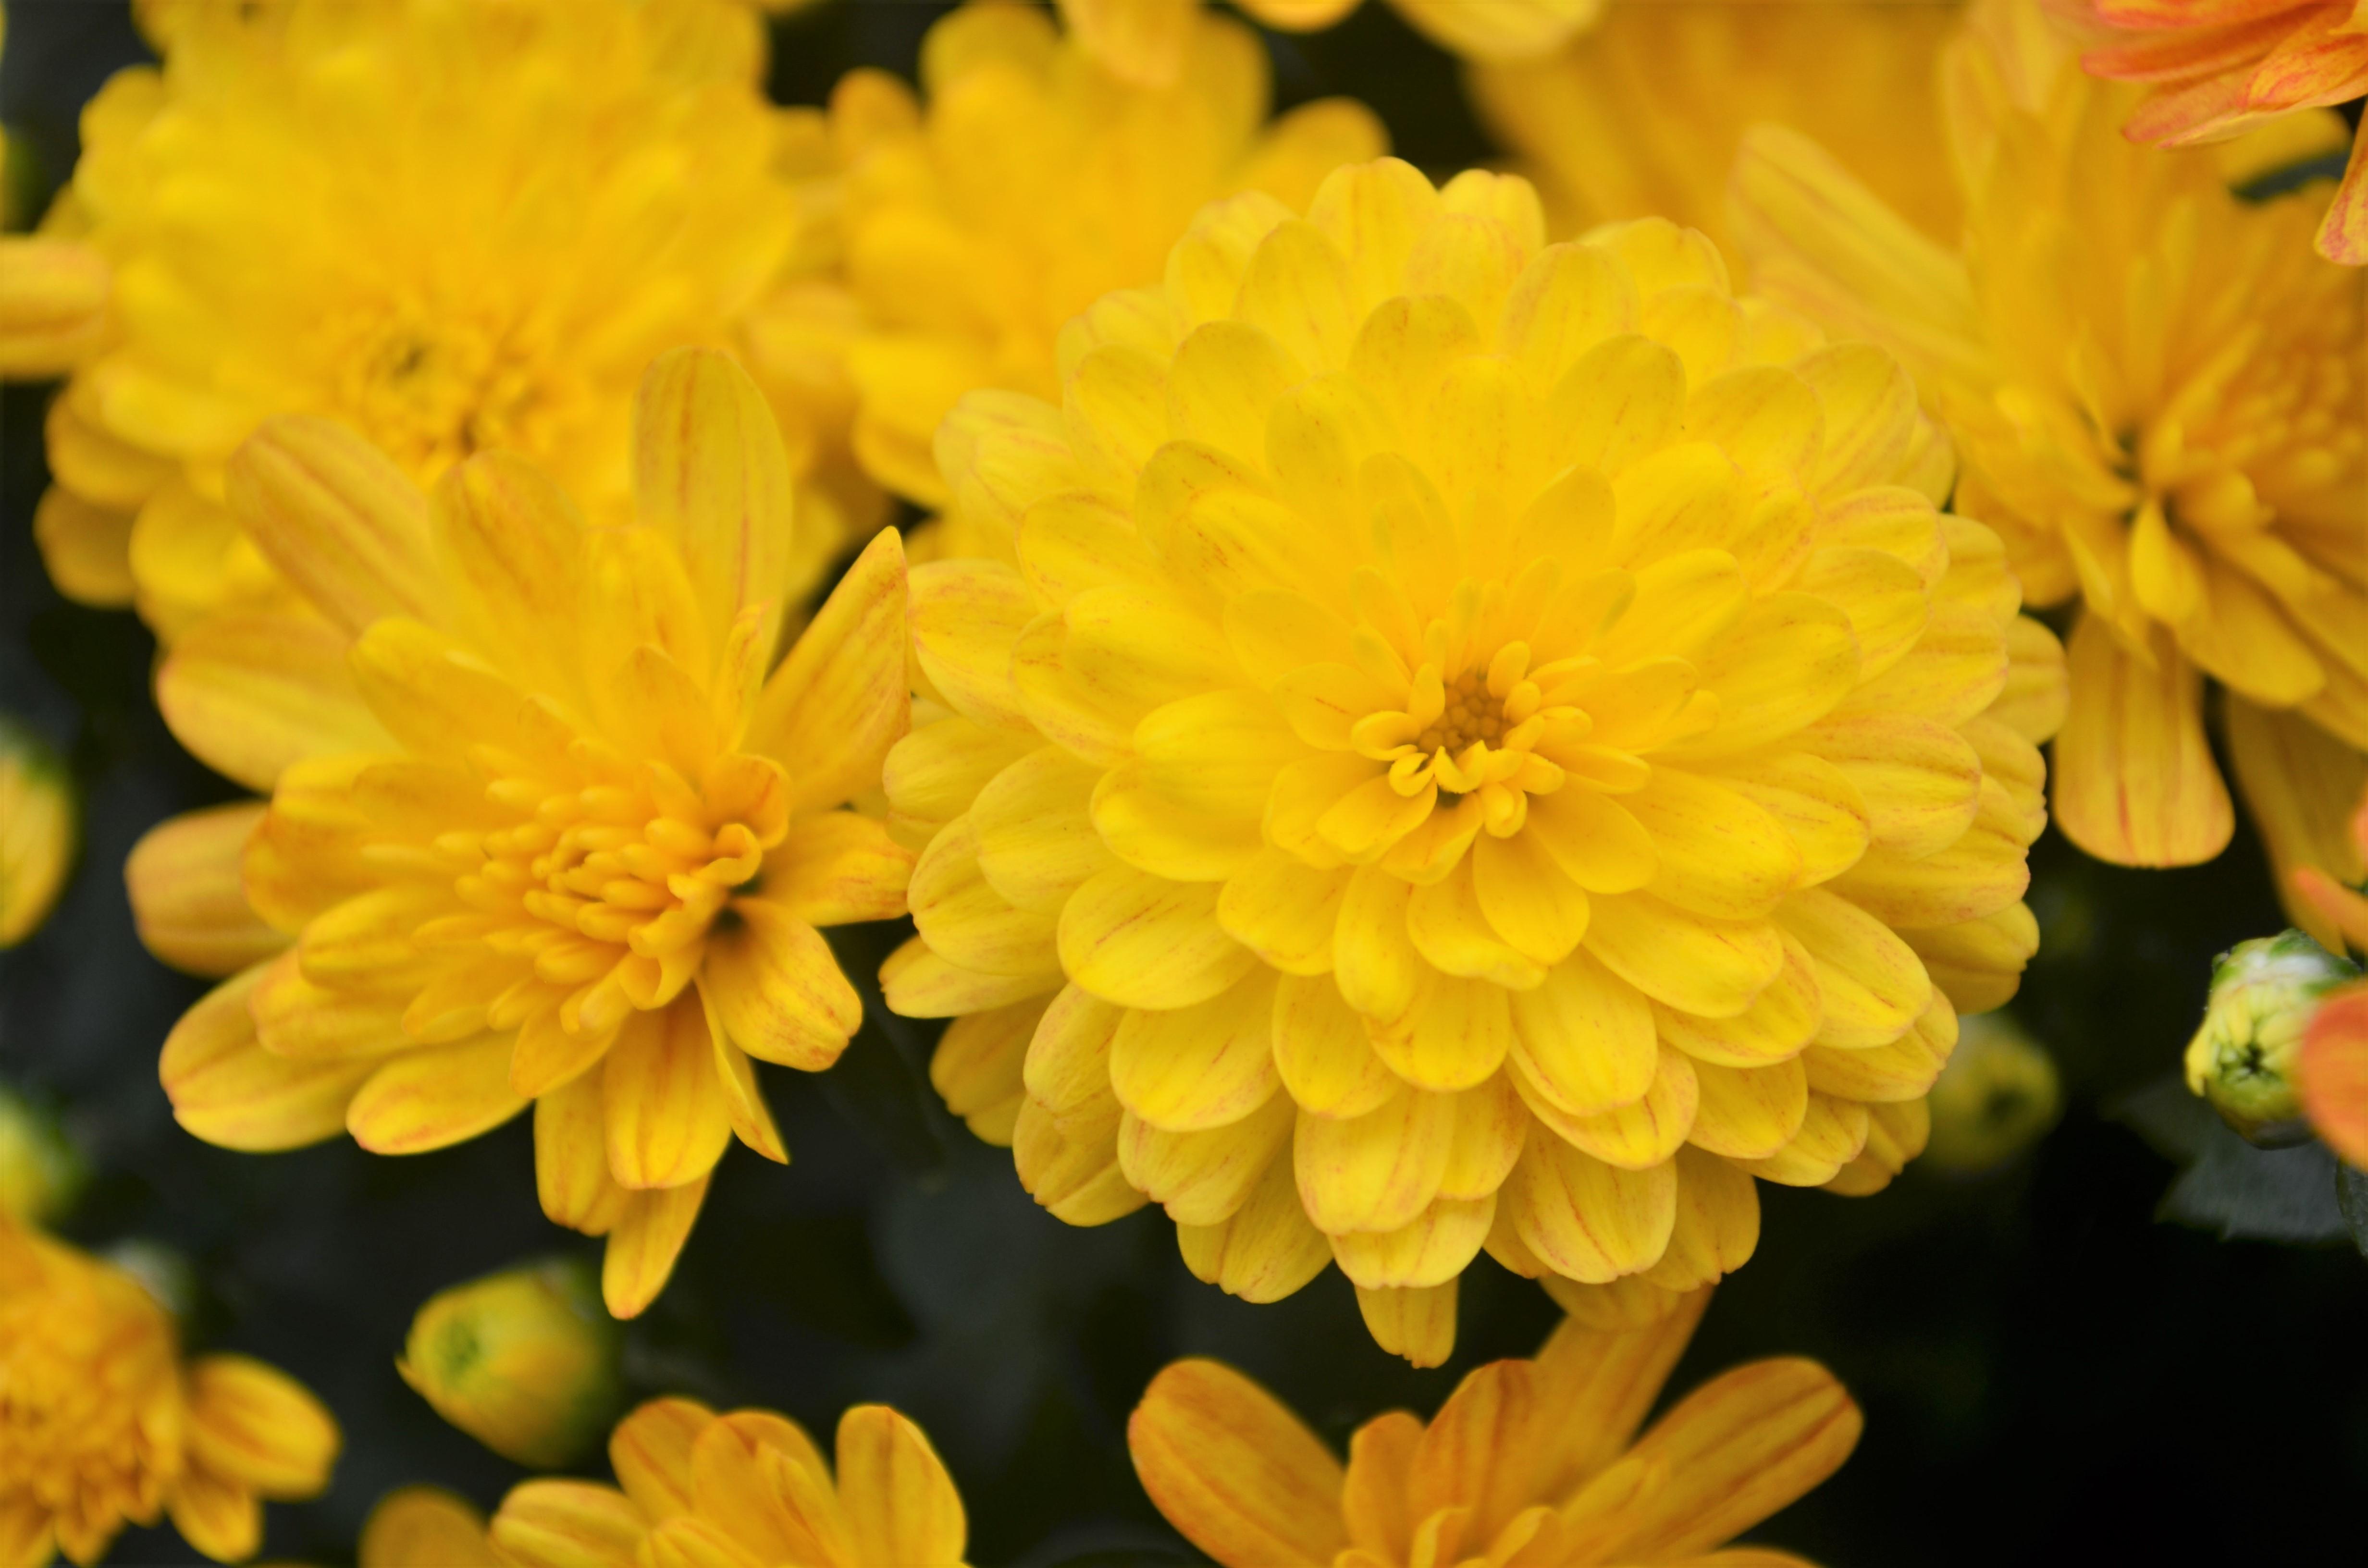 Chrysanthemum Jacqueline 'Yellow' - Mum from Hillcrest Nursery